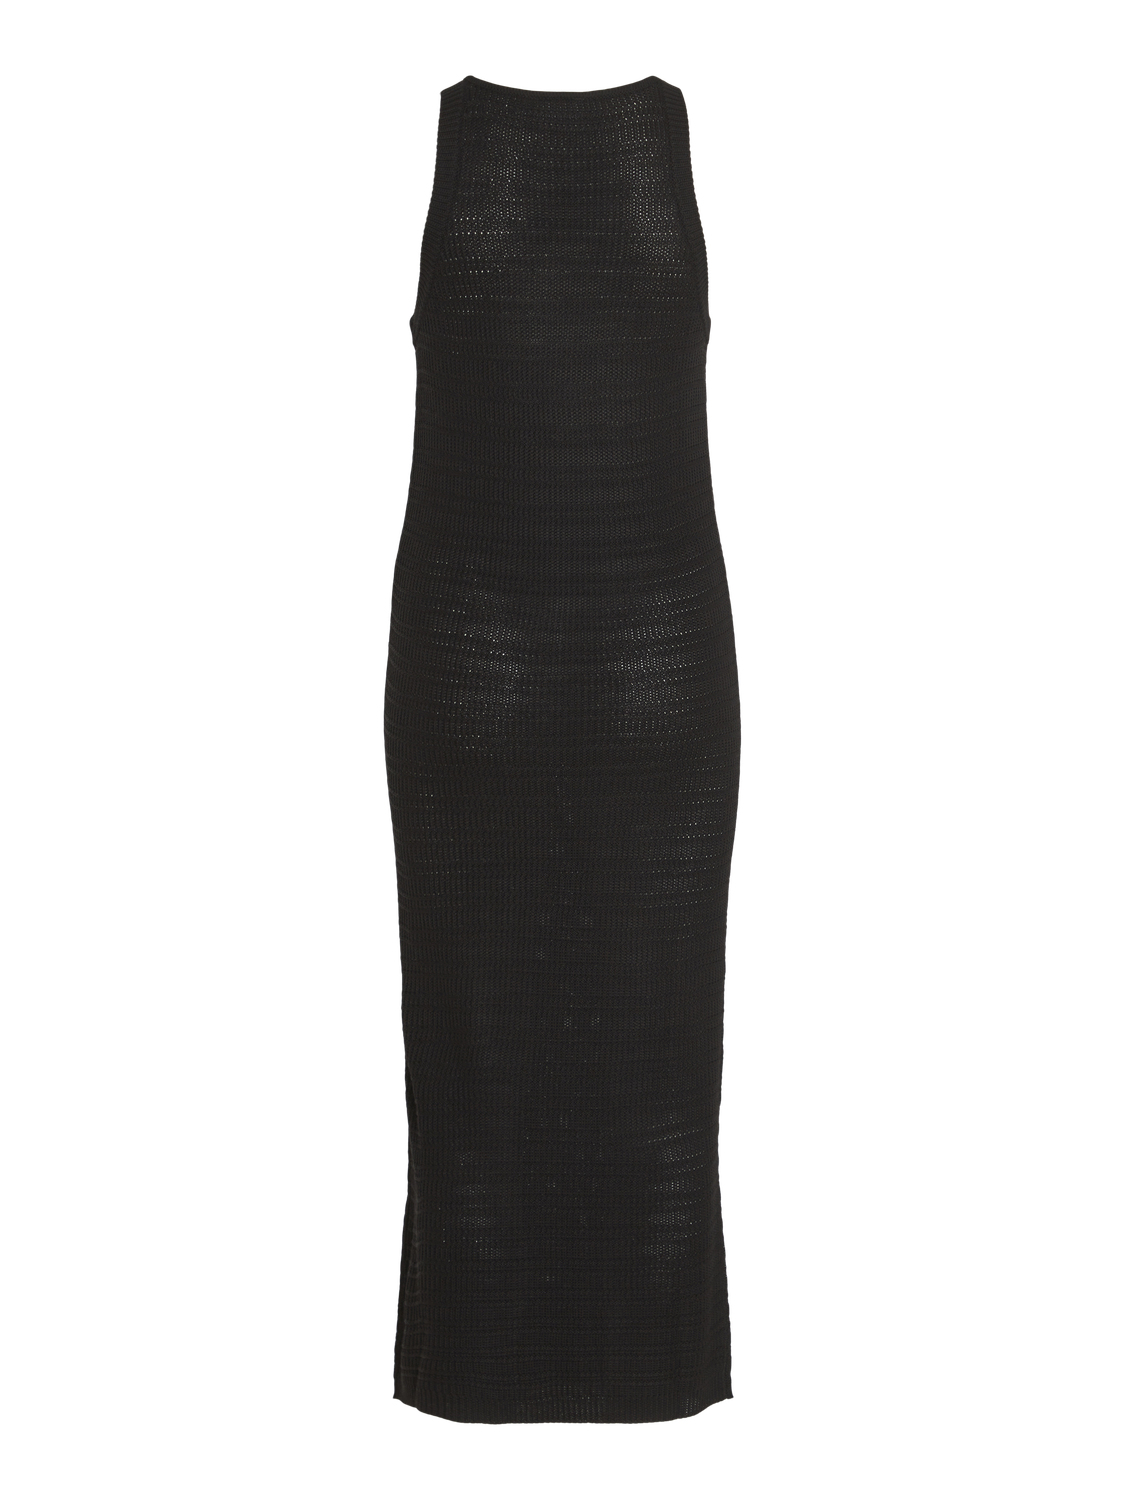 VIMARGOT Dress - Black Beauty